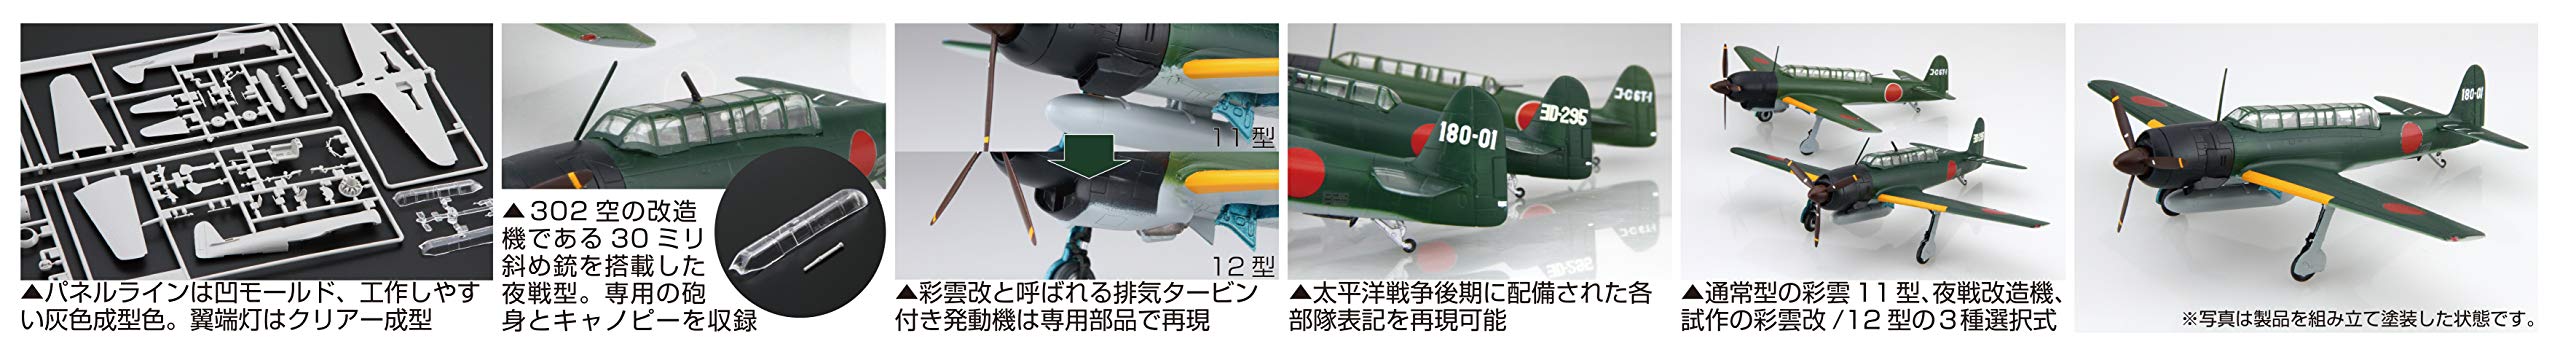 Fujimi Model 1/72 C Series No.37 Nakajima Reconnaissance Aircraft Saiun (Type 11/Type 11 Night Battle)/Saiun Kai C37